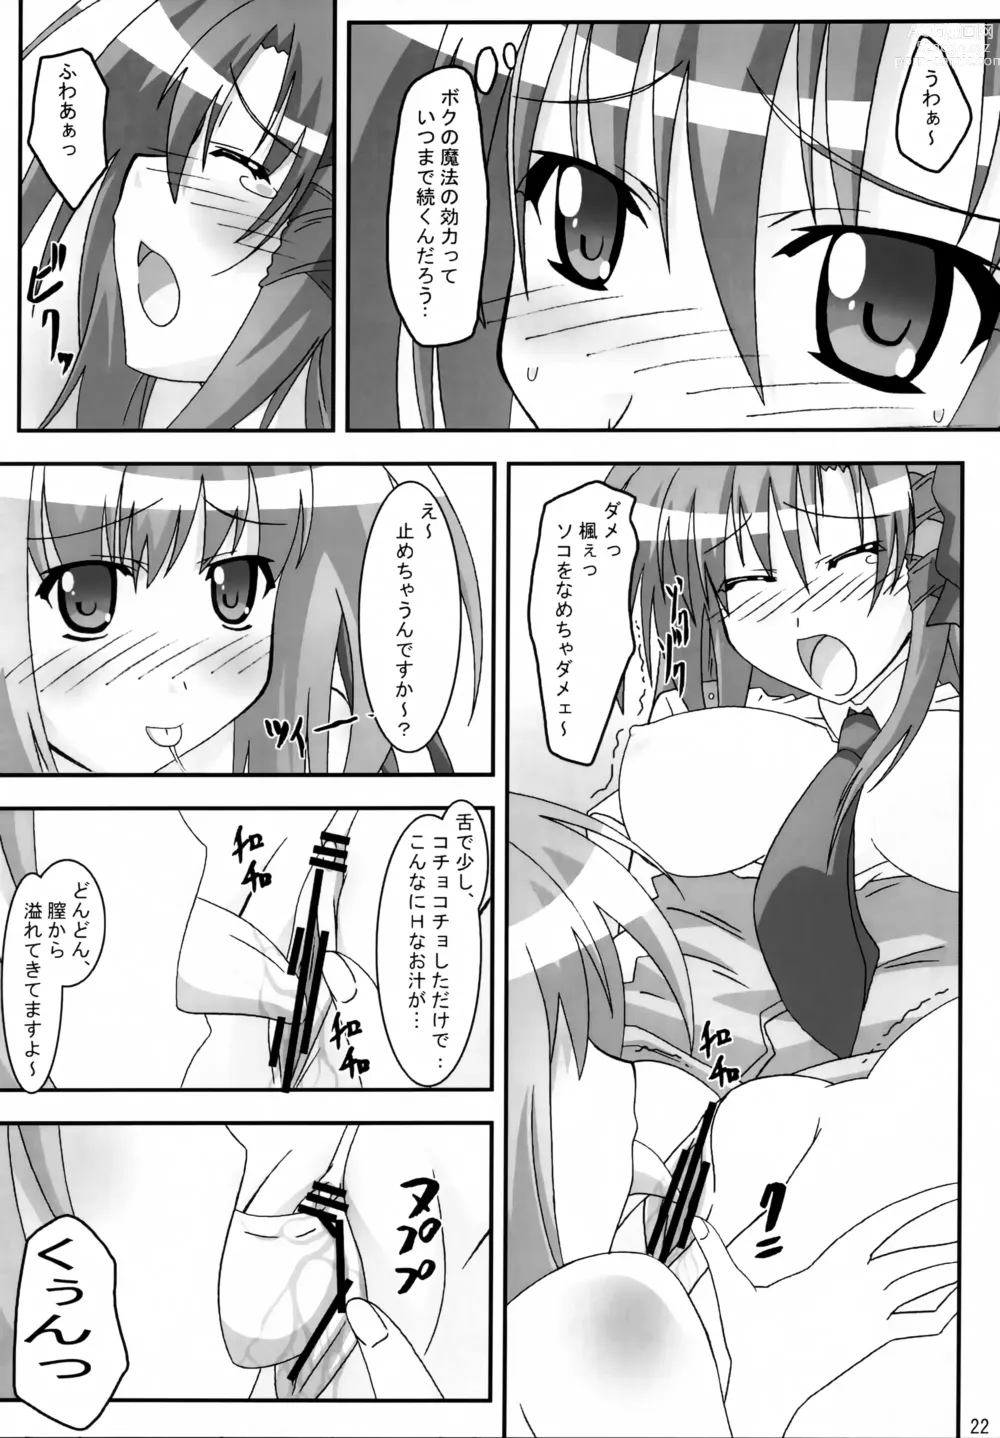 Page 21 of doujinshi SHUFFLE! With